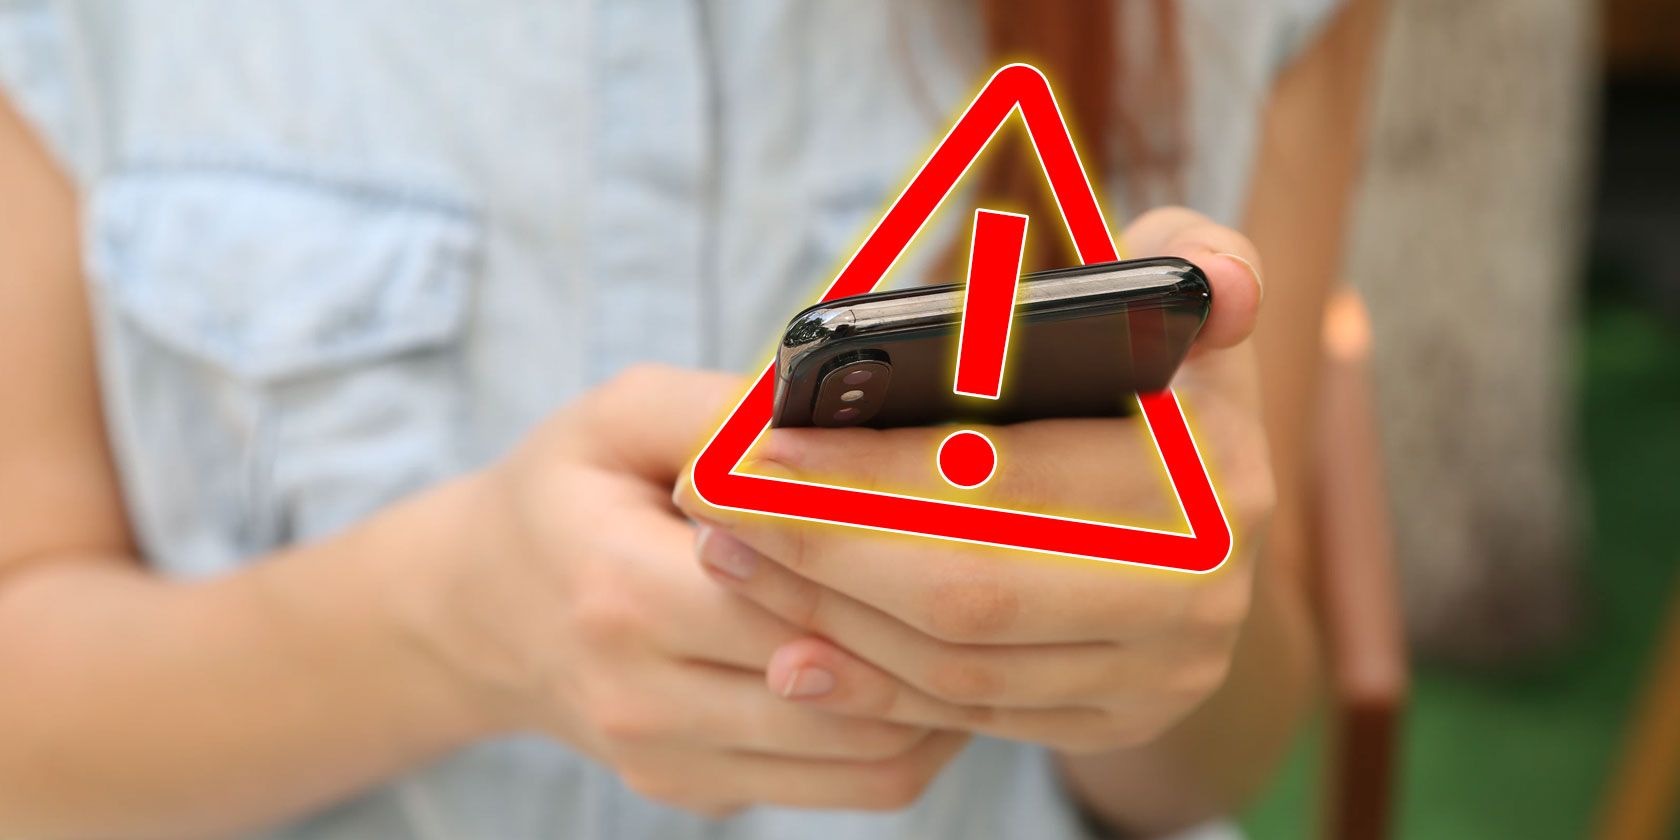 Warning Sign around a smartphone